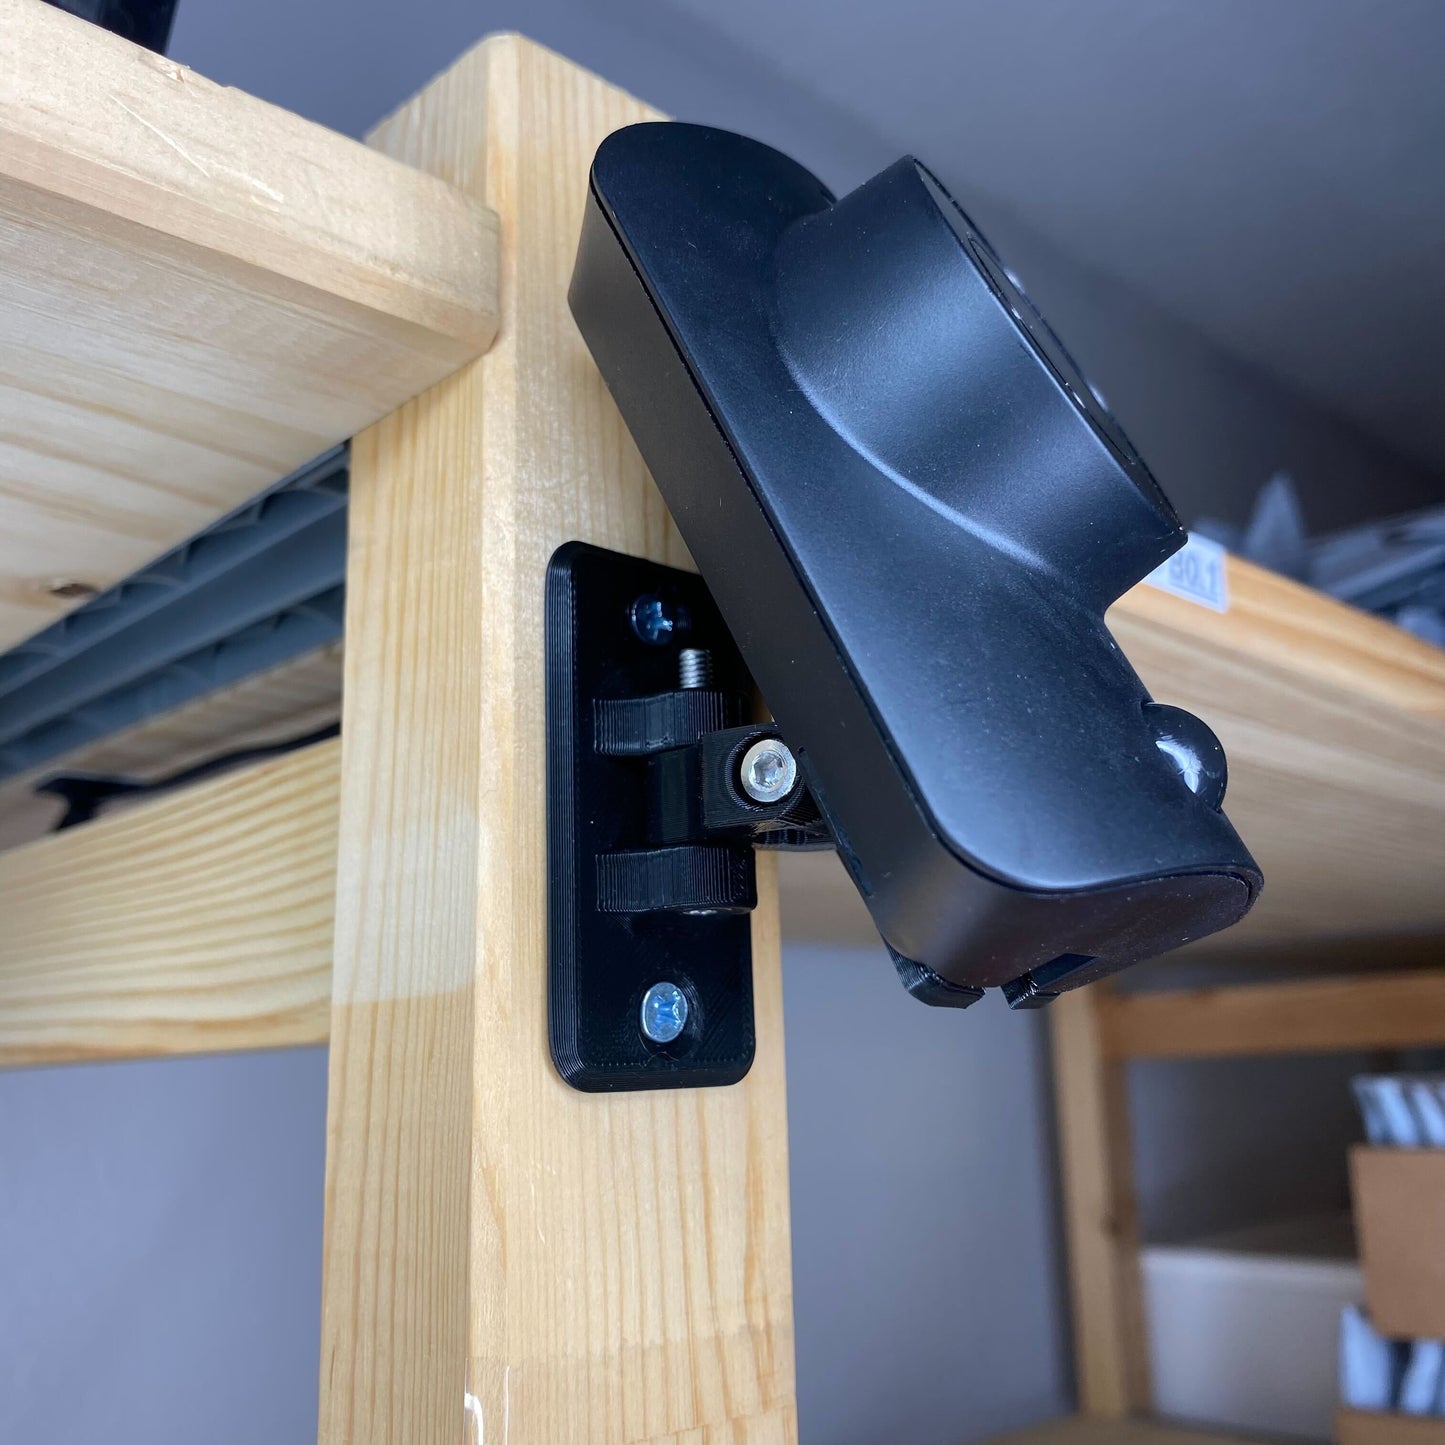 Adjustable Wall Mount for SimpliSafe Indoor Camera